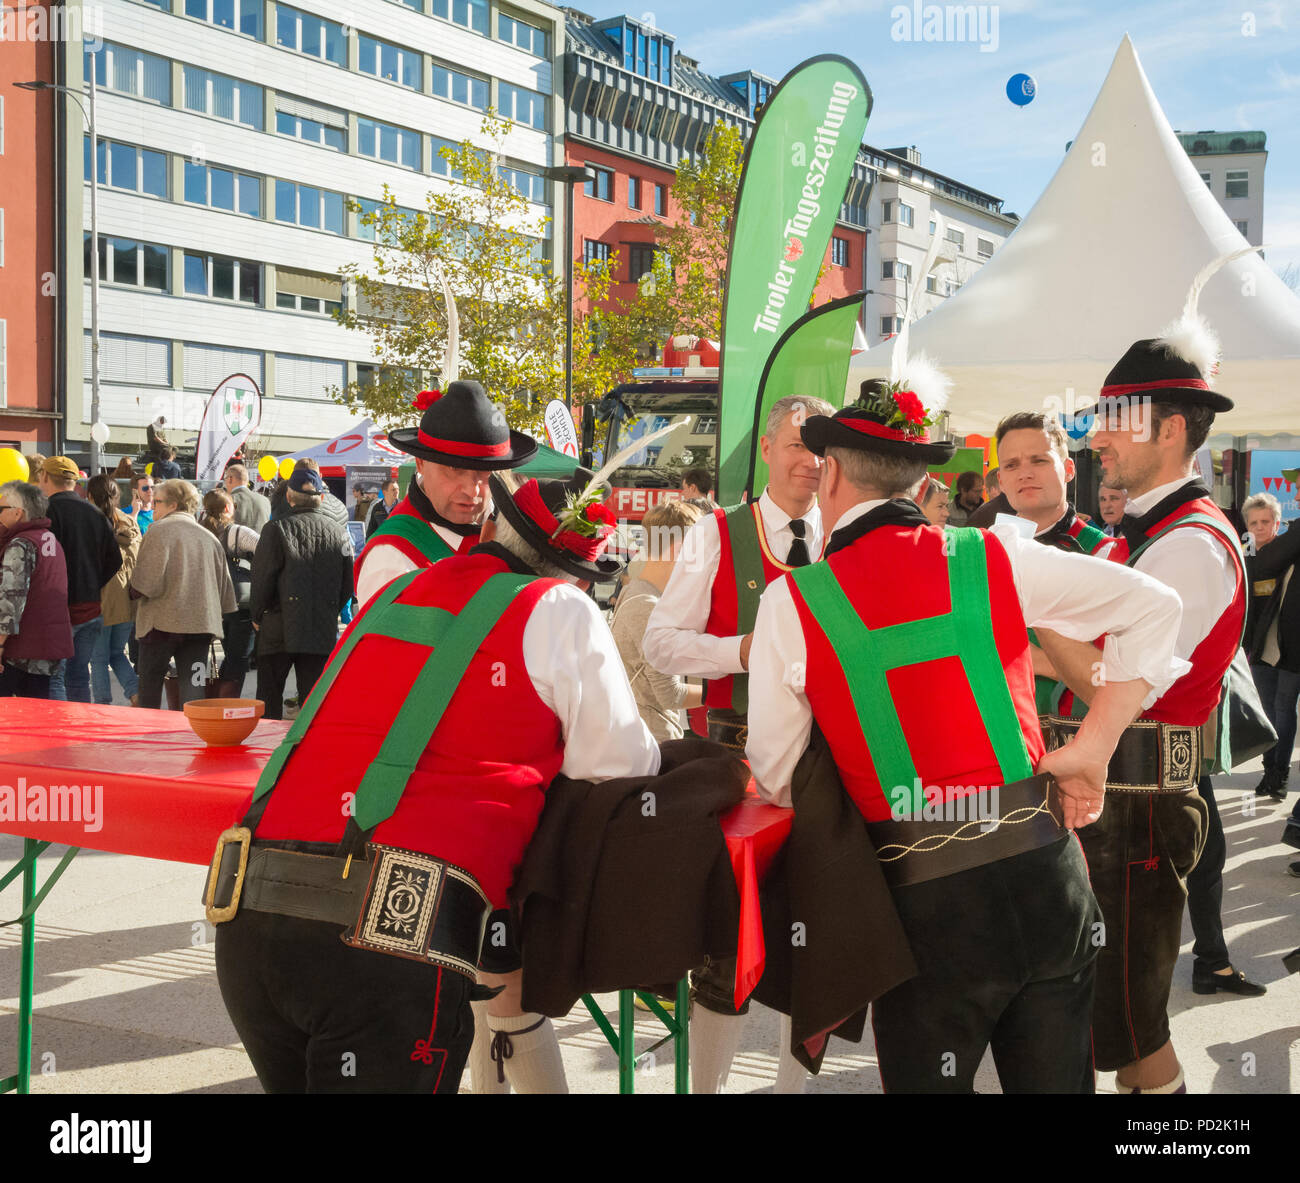 Tiroler Schützen (Tyrolean Home Guards) in uniform together during a party in Austria) - INNSBRUCK, Austria  - Europe Stock Photo